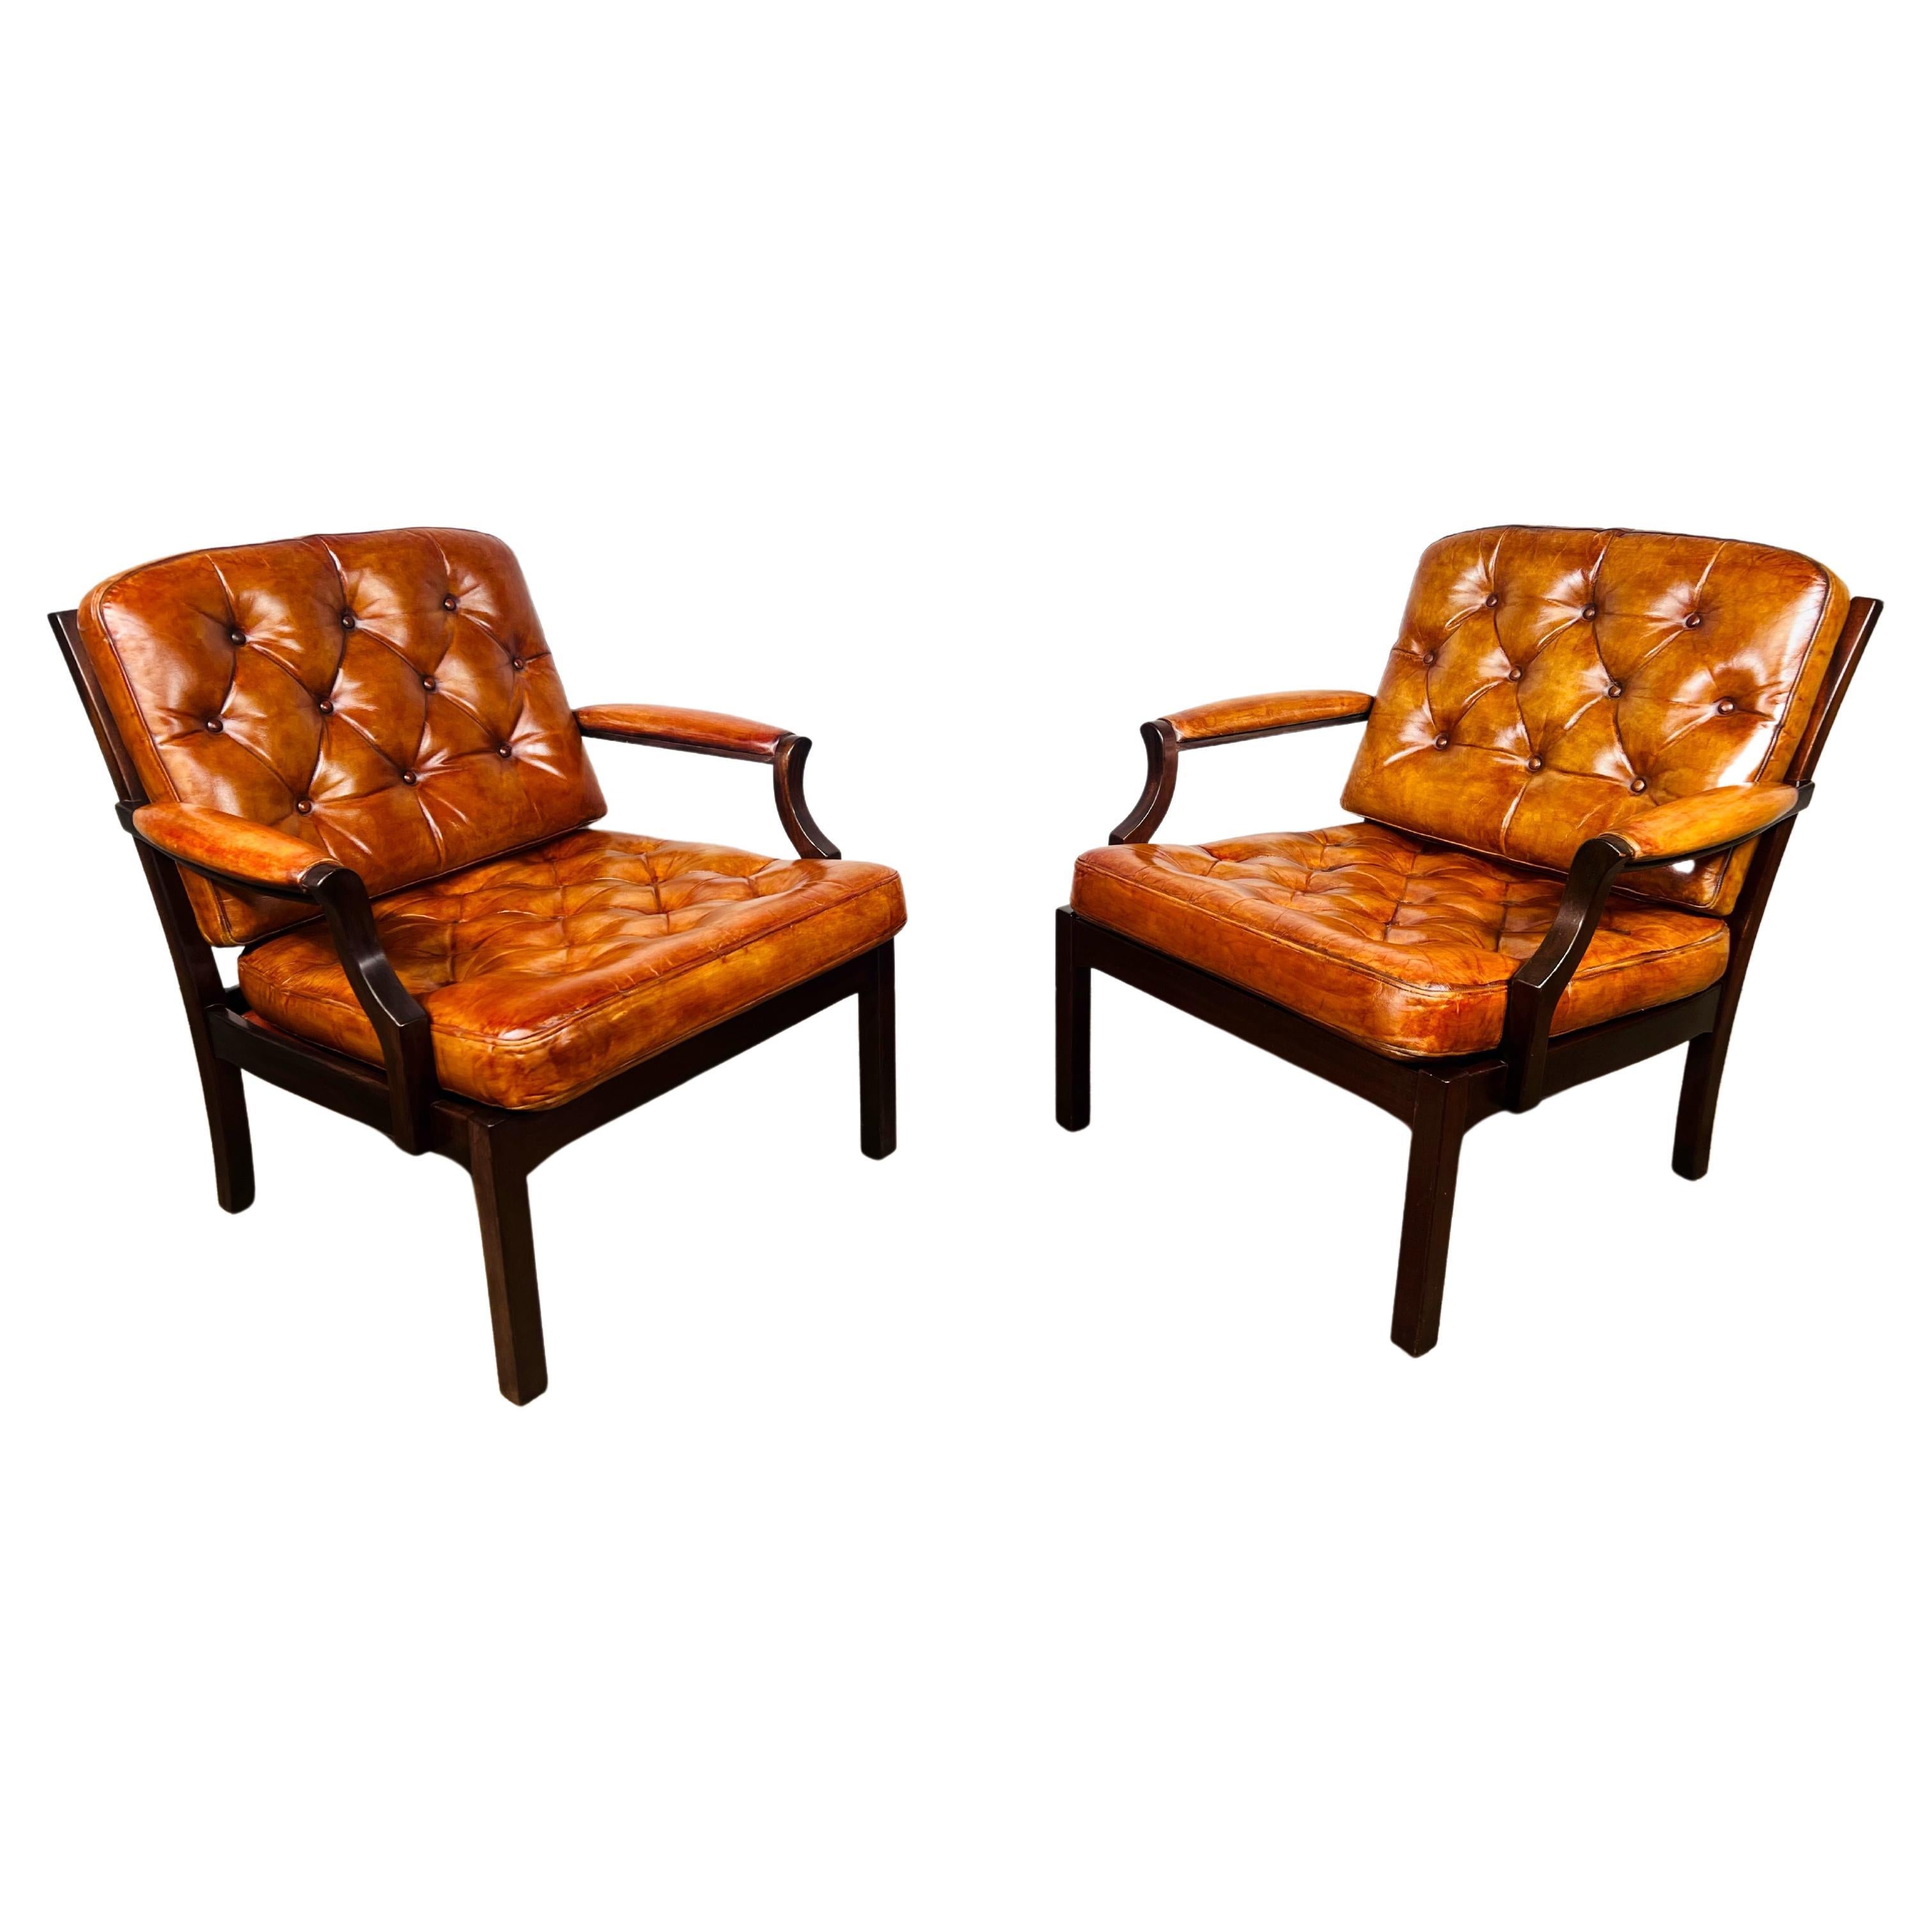 Elegant Pair of Vintage Danish Leather Armchairs Light Tan #734 For Sale